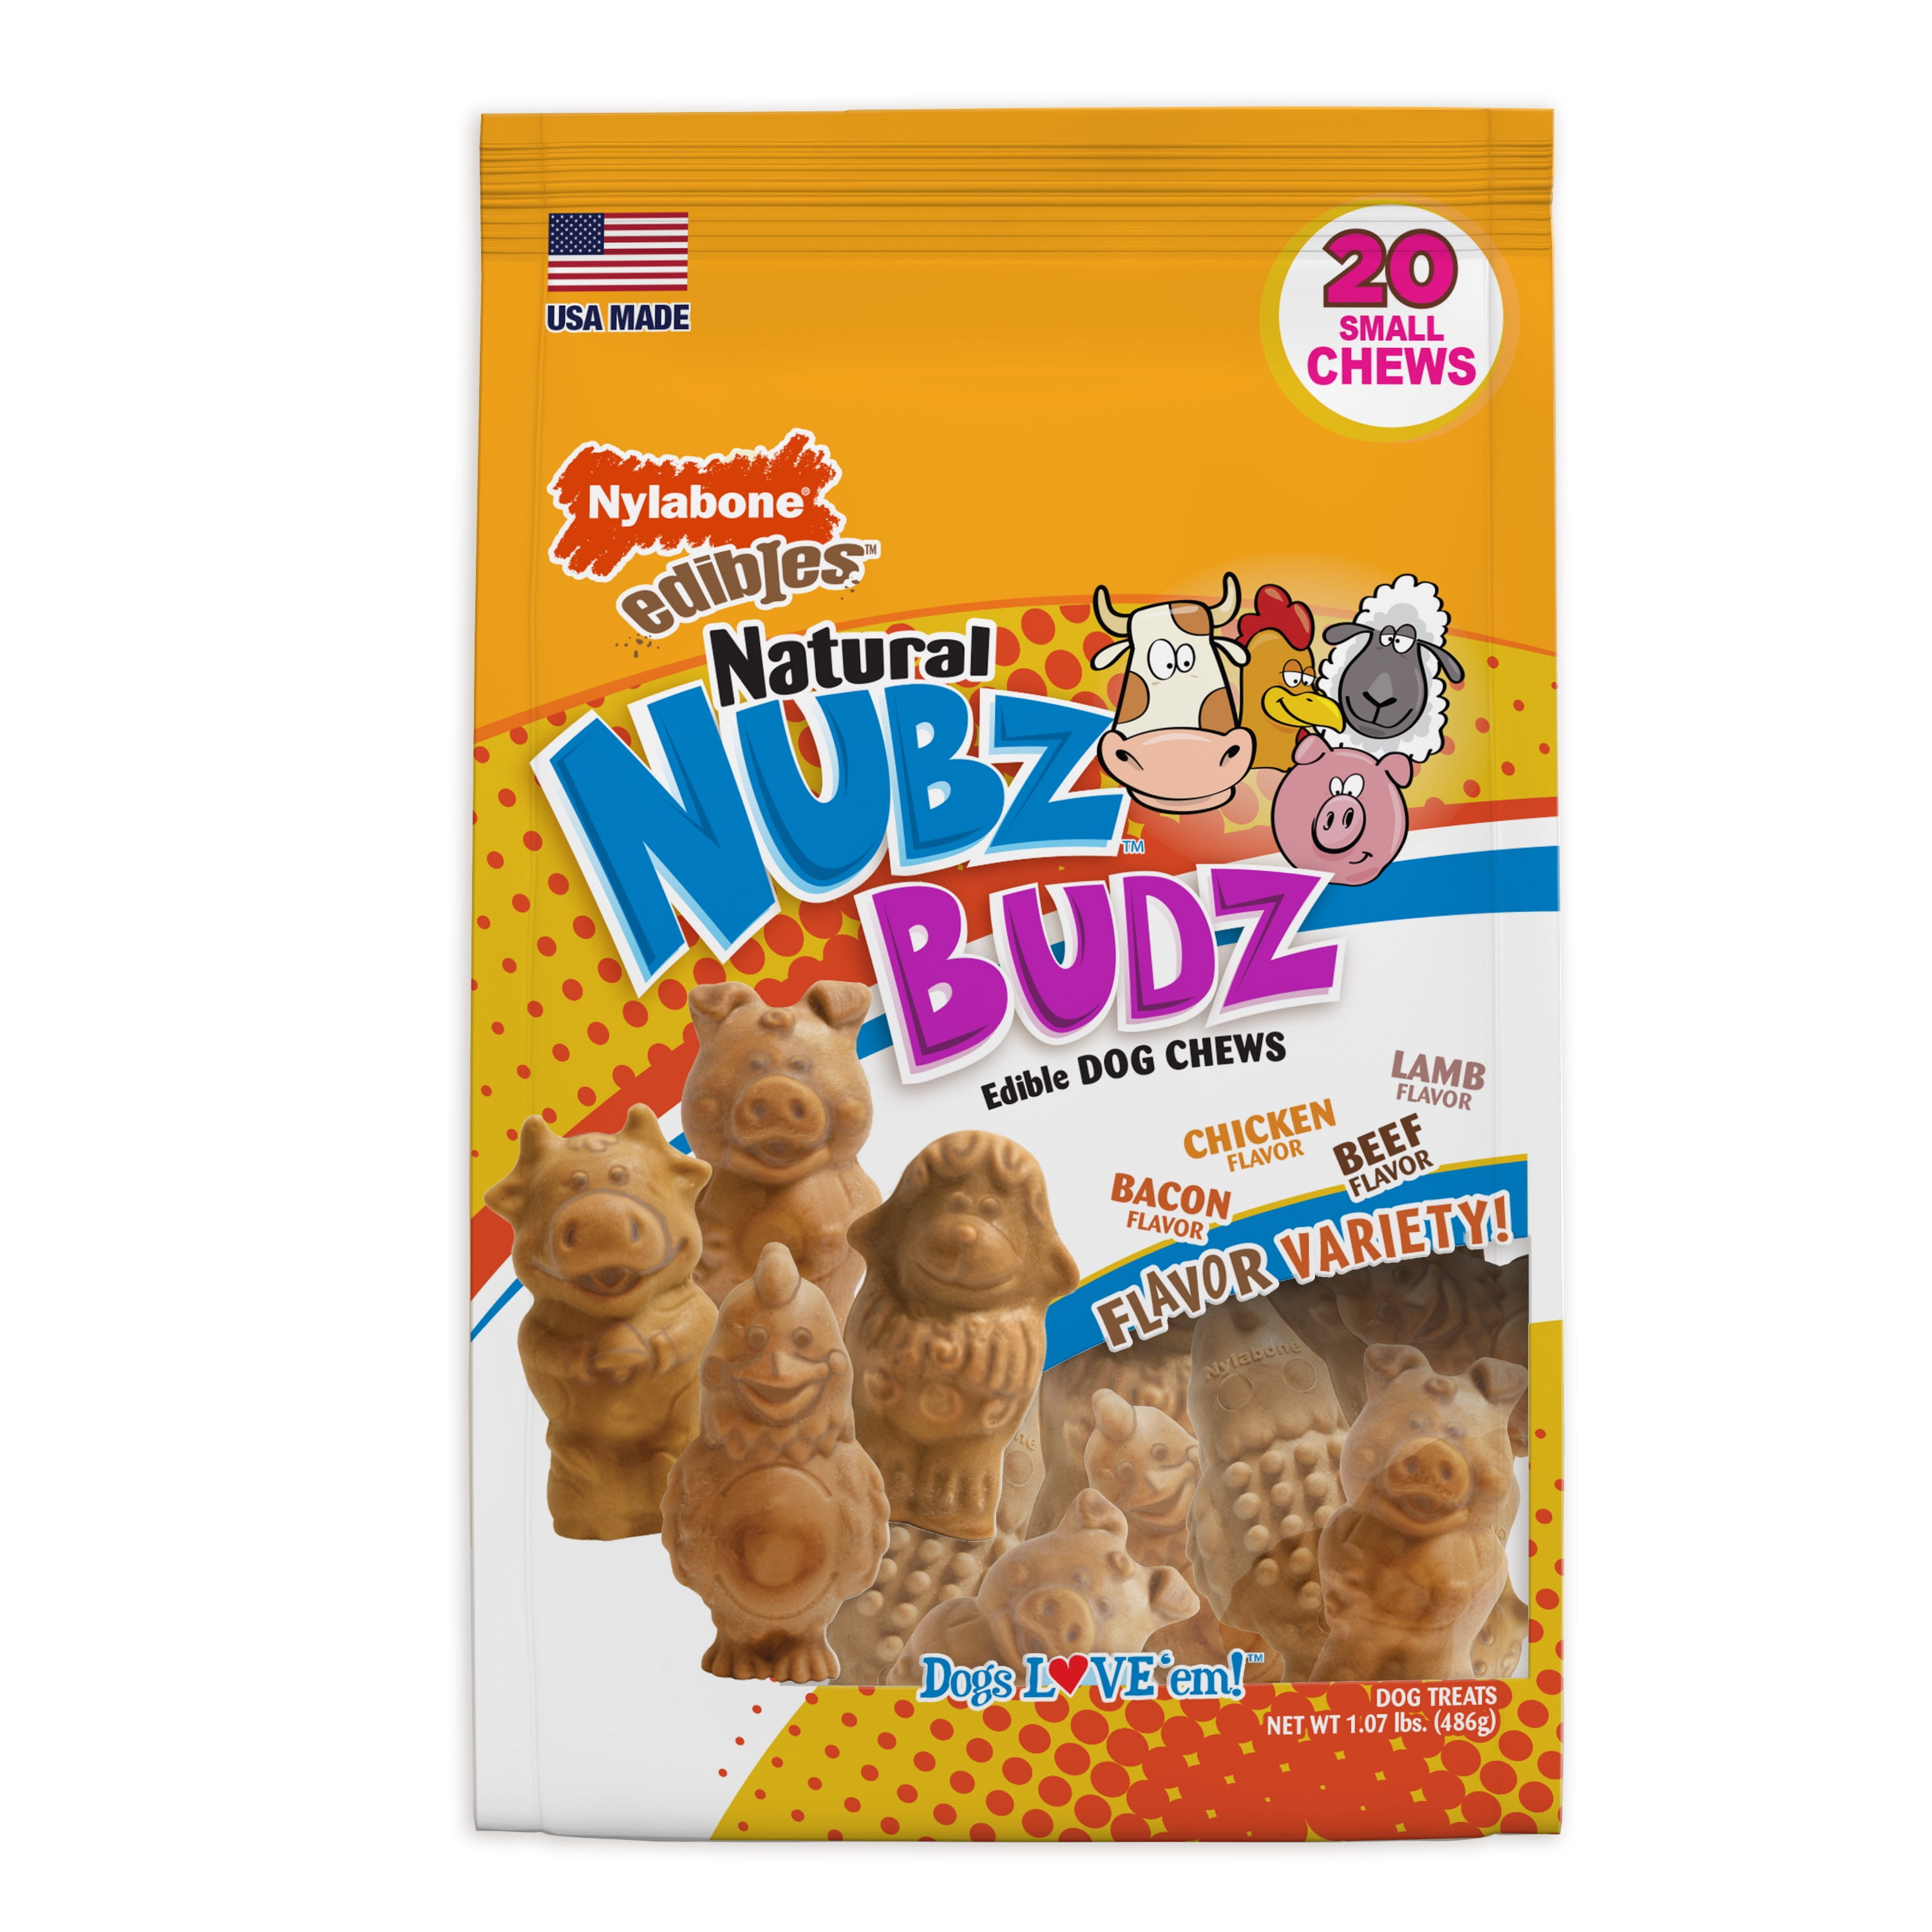 Nylabone Natural Nubz Budz Edible Dog Chews